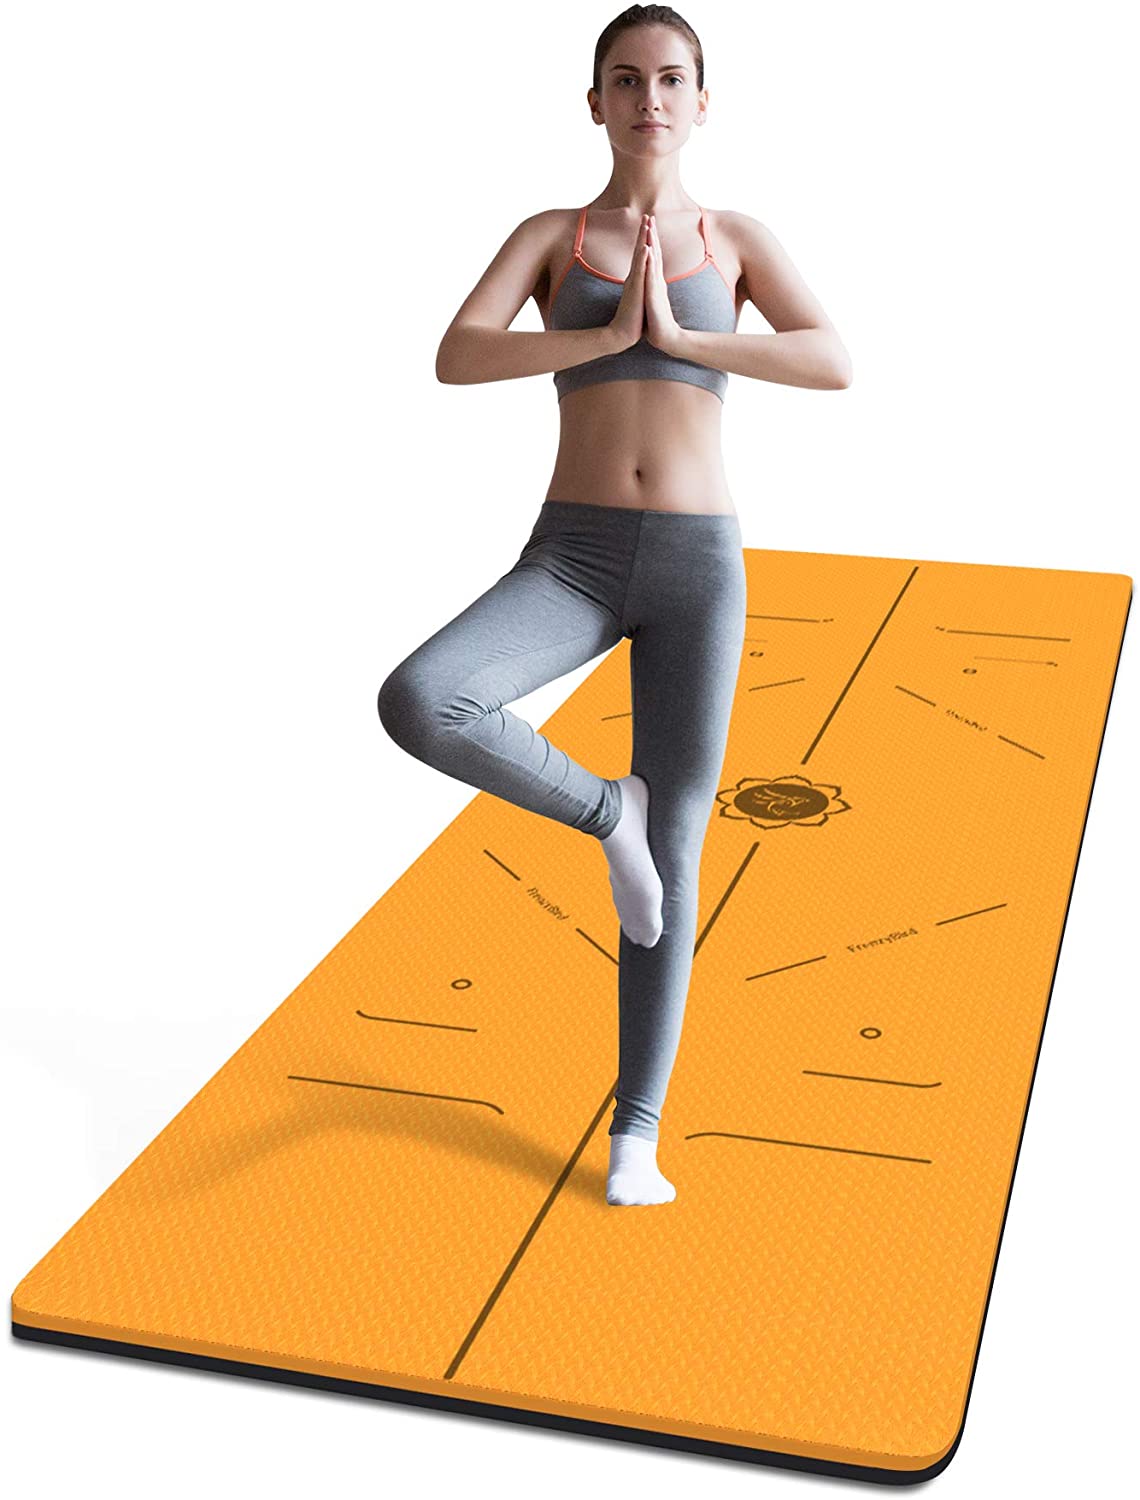 Anthropologie Folding Travel Yoga Mat 24 x 68 Yoga Pilates Workout  Fitness Exercise Mat - ShopperBoard